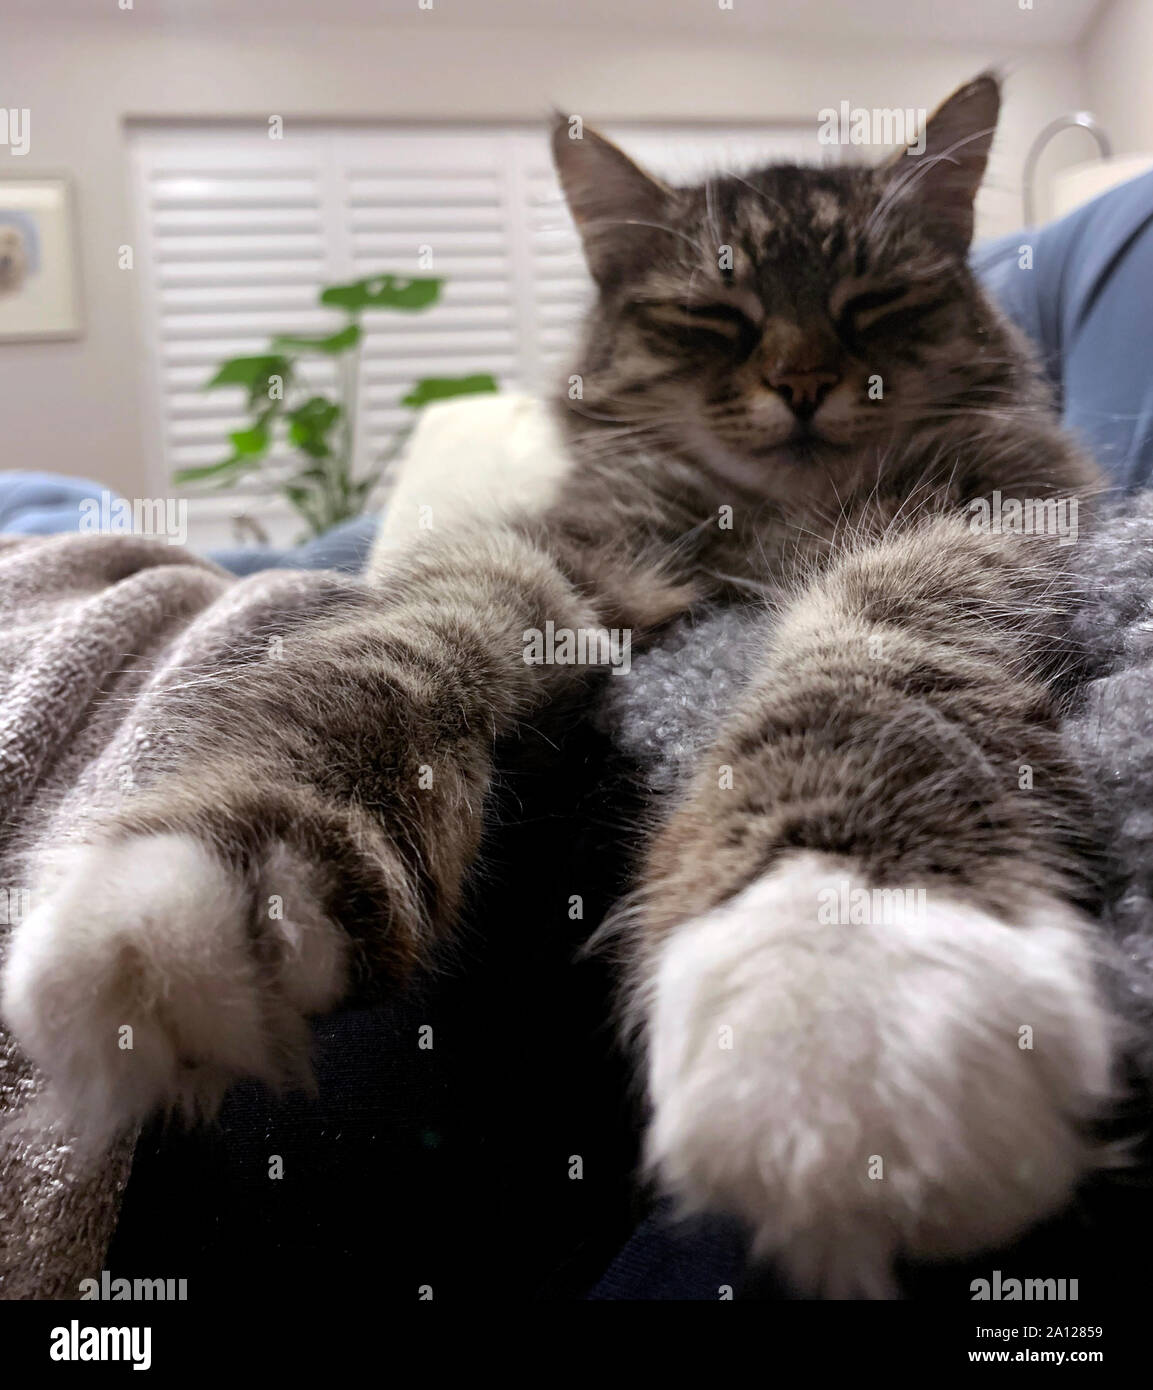 cat that looks like it has huge legs Stock Photo